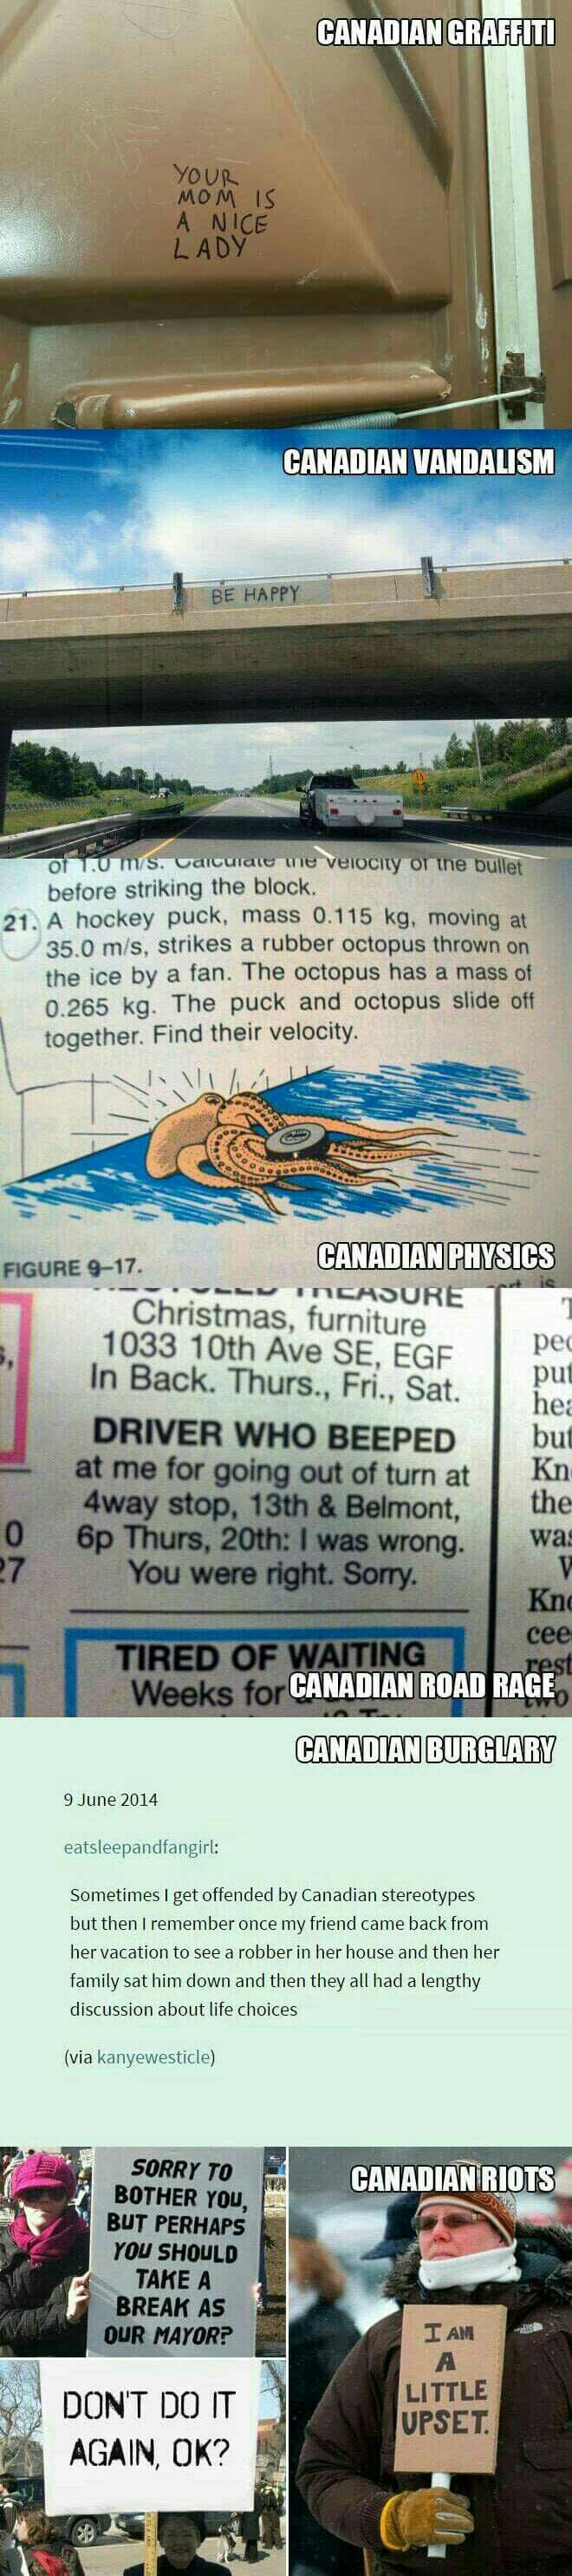 canadian graffiti, canadian vandalism, canadian physics, canadian road rage, canadian burglary, canadian riots